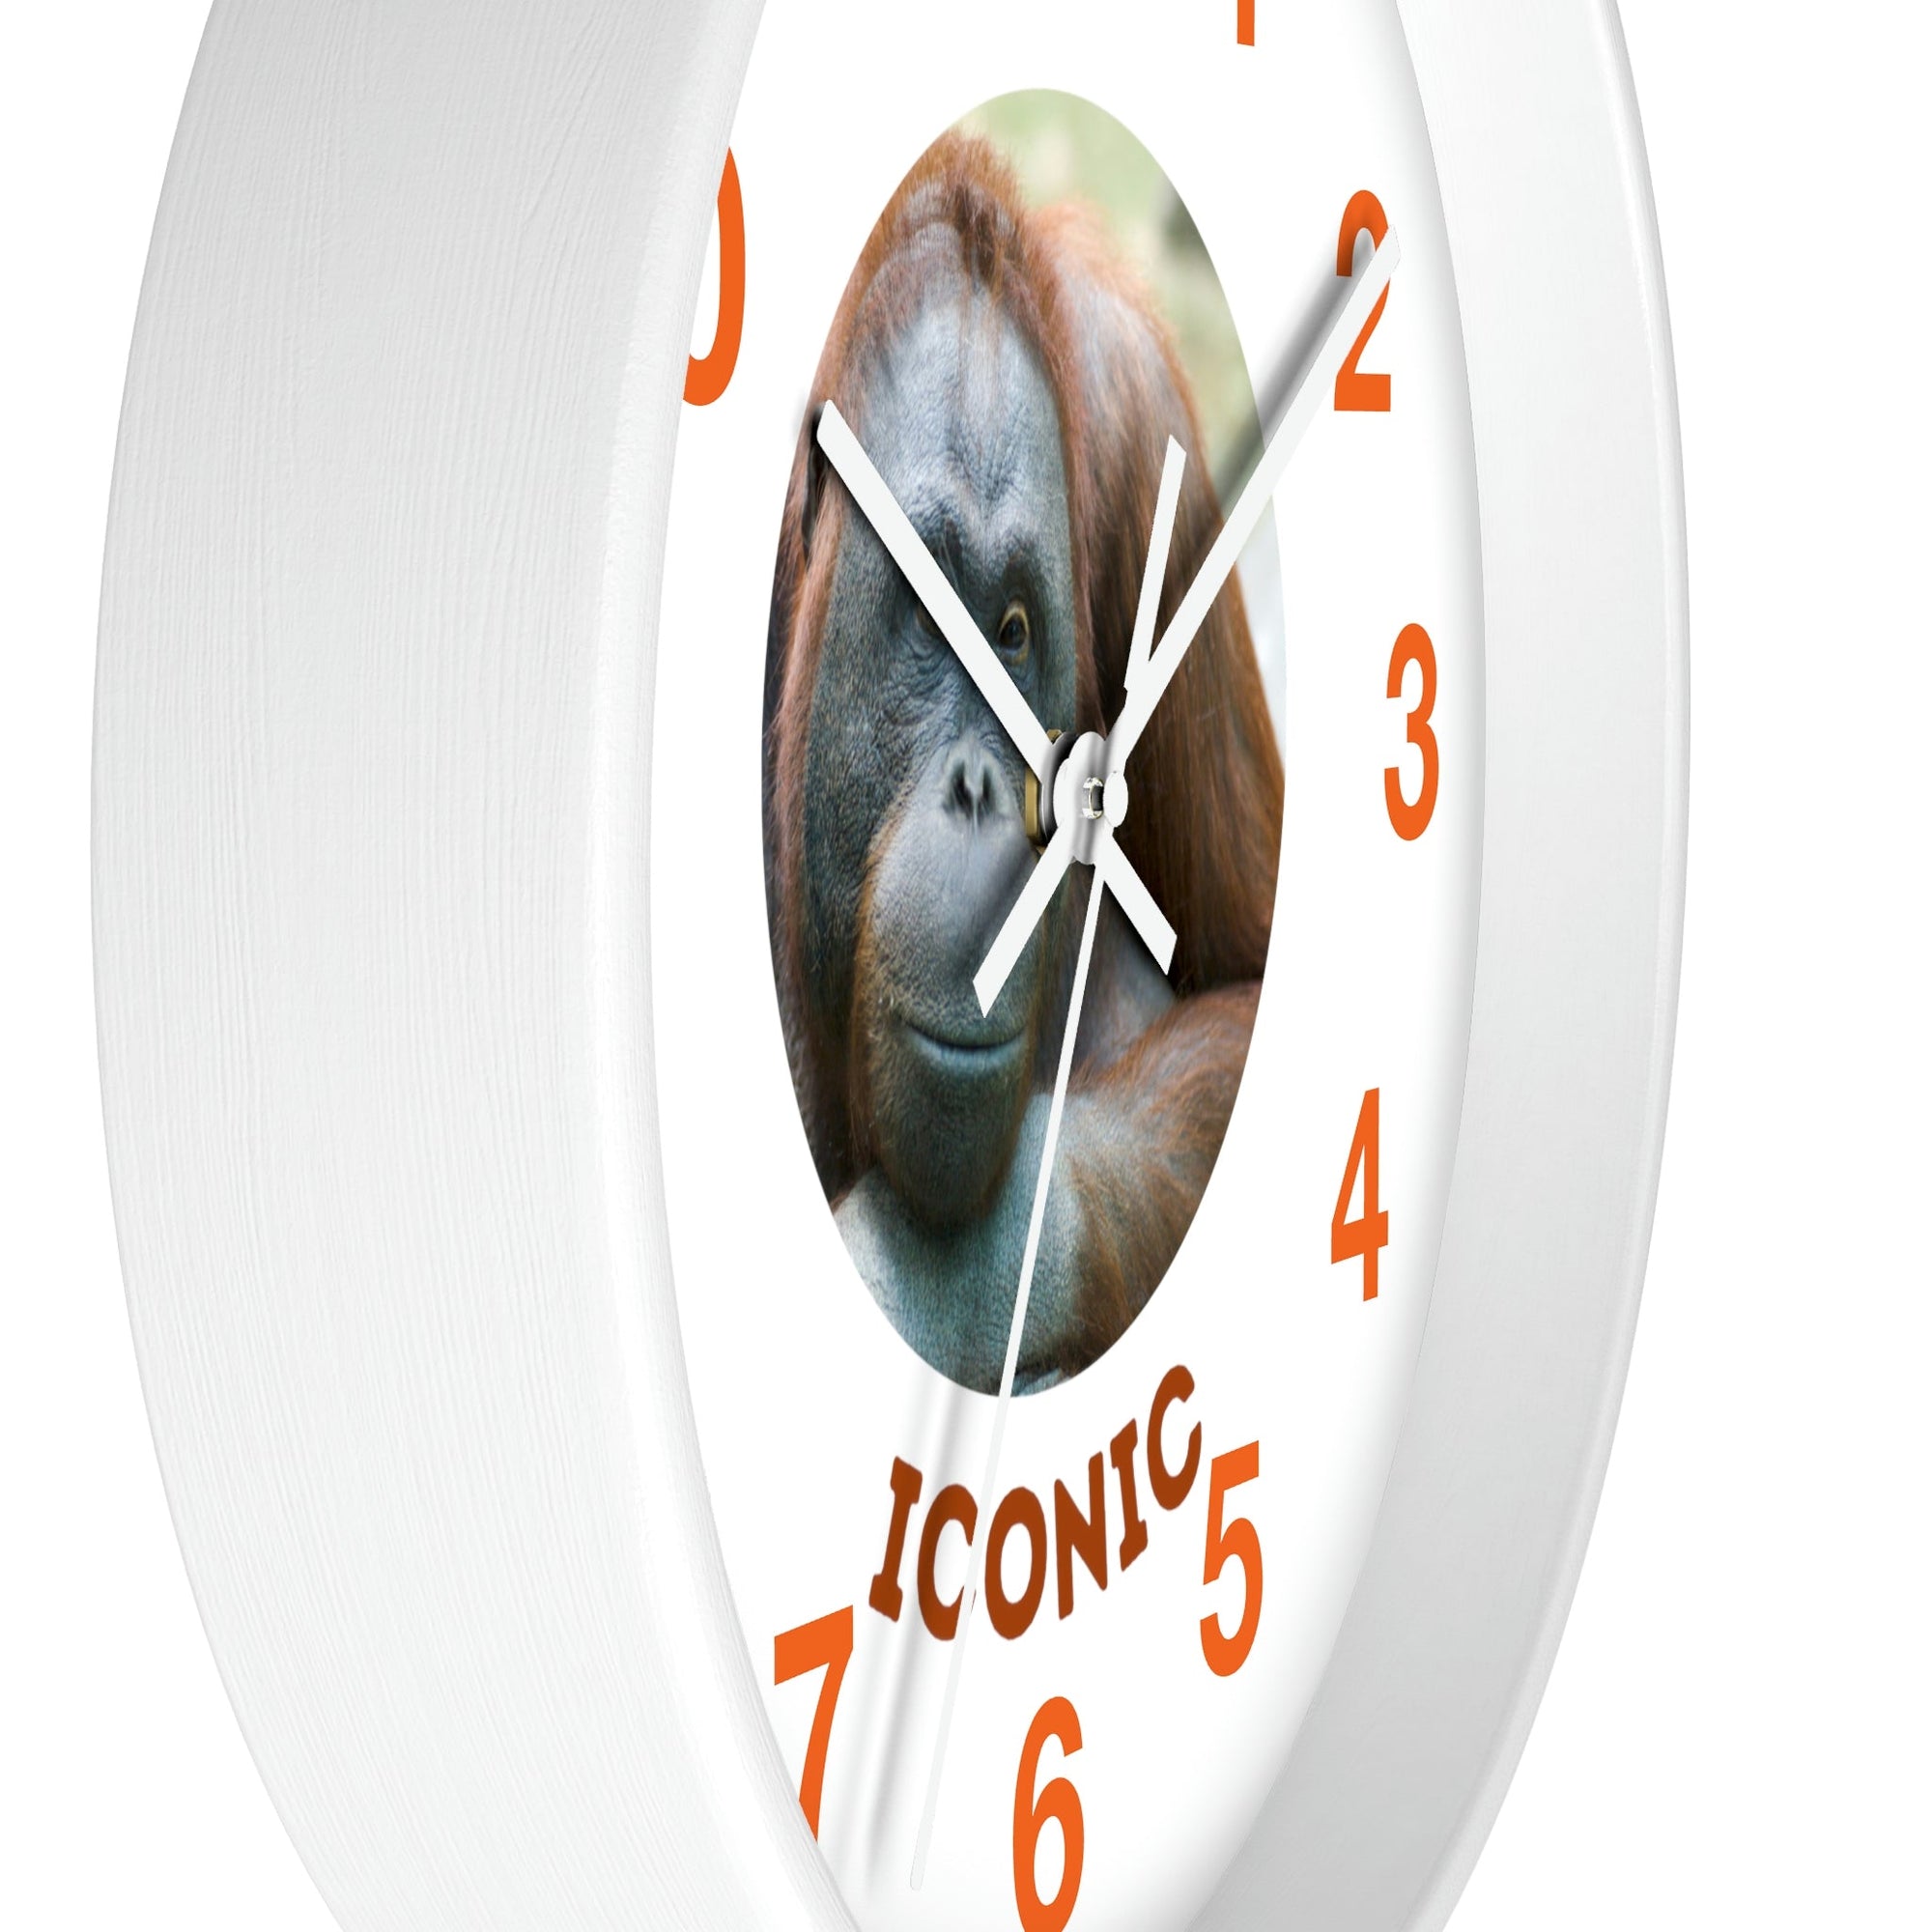 Wall Clock Orangutan - Primation